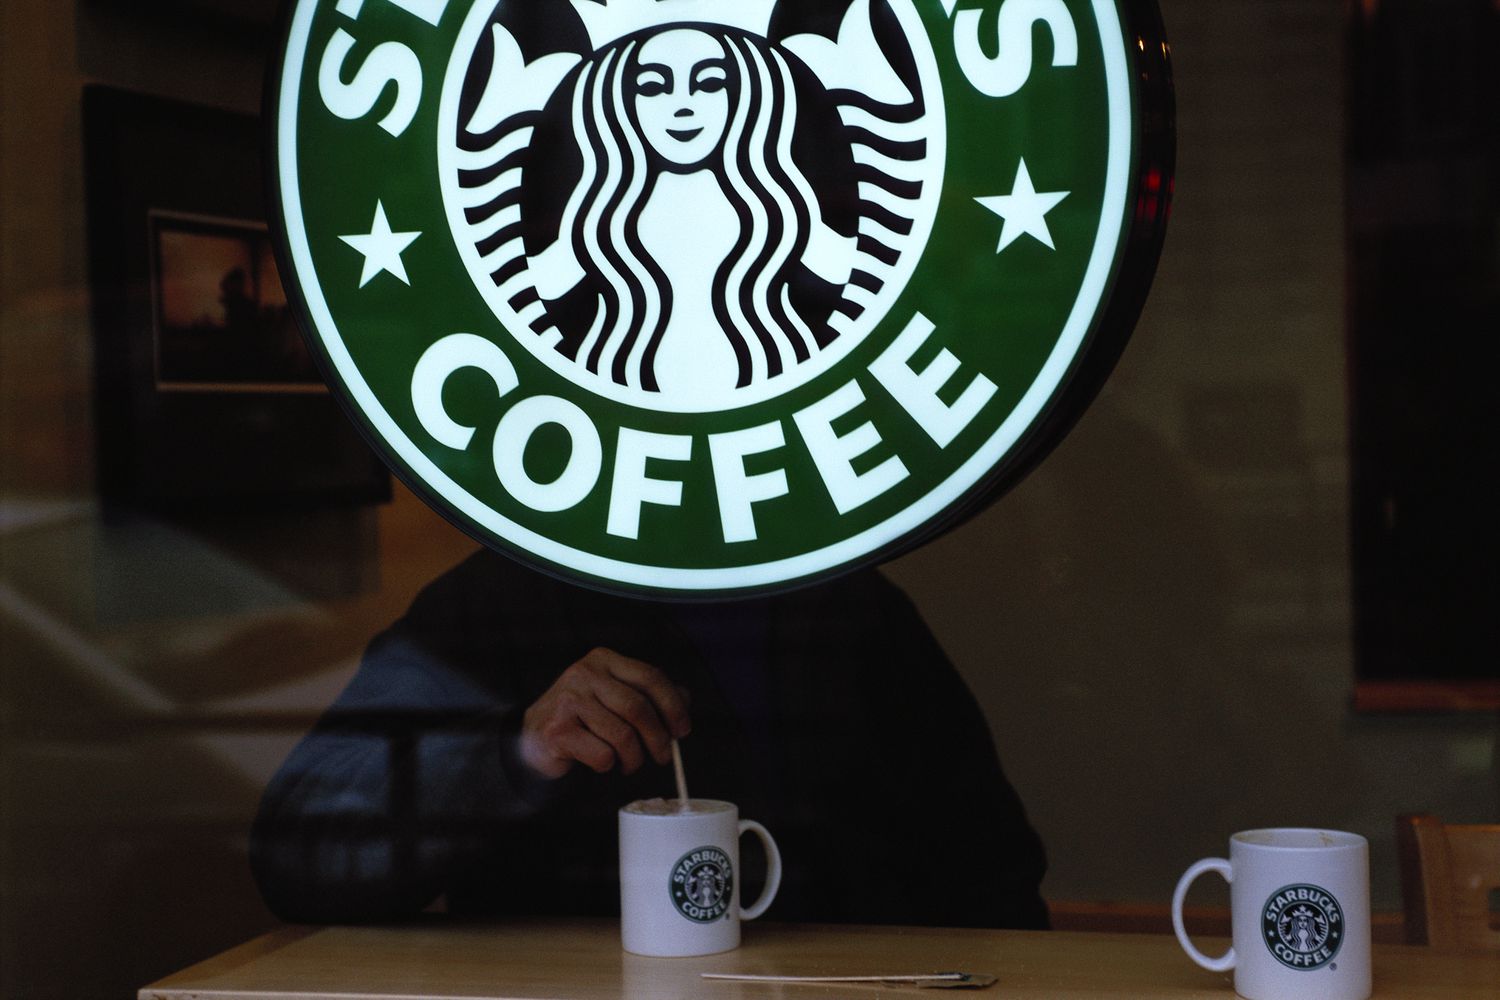 Kunde hinter Starbucks-Schild in London